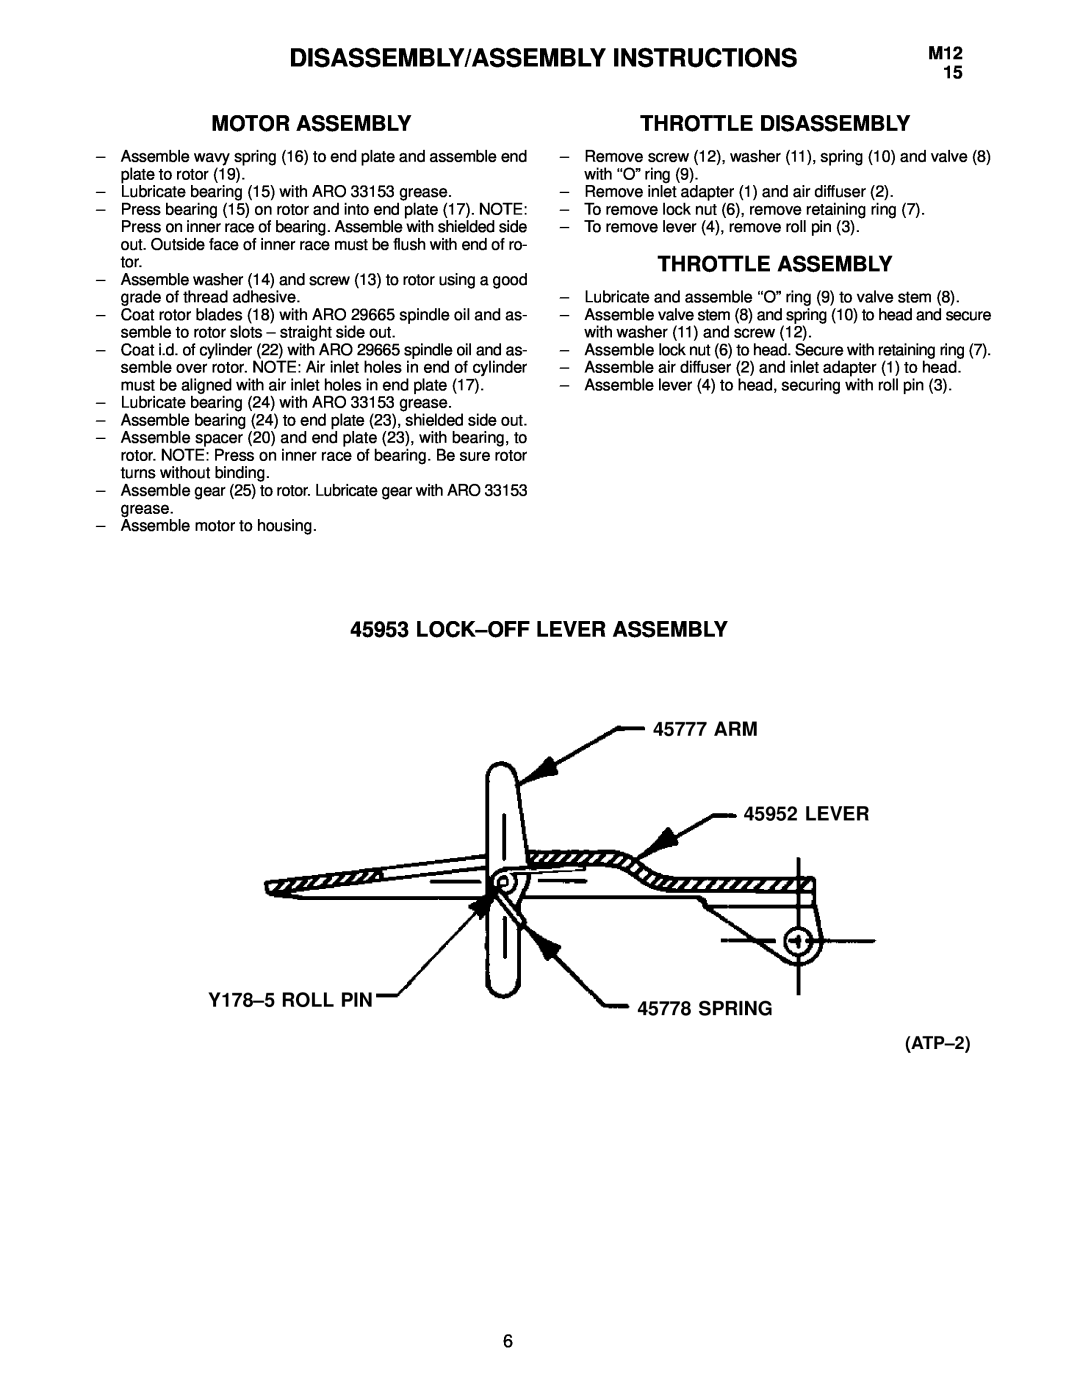 Ingersoll-Rand 84792( ) Motor Assembly, Throttle Disassembly, Throttle Assembly, Lock-Off Lever Assembly, ARM 45952 LEVER 